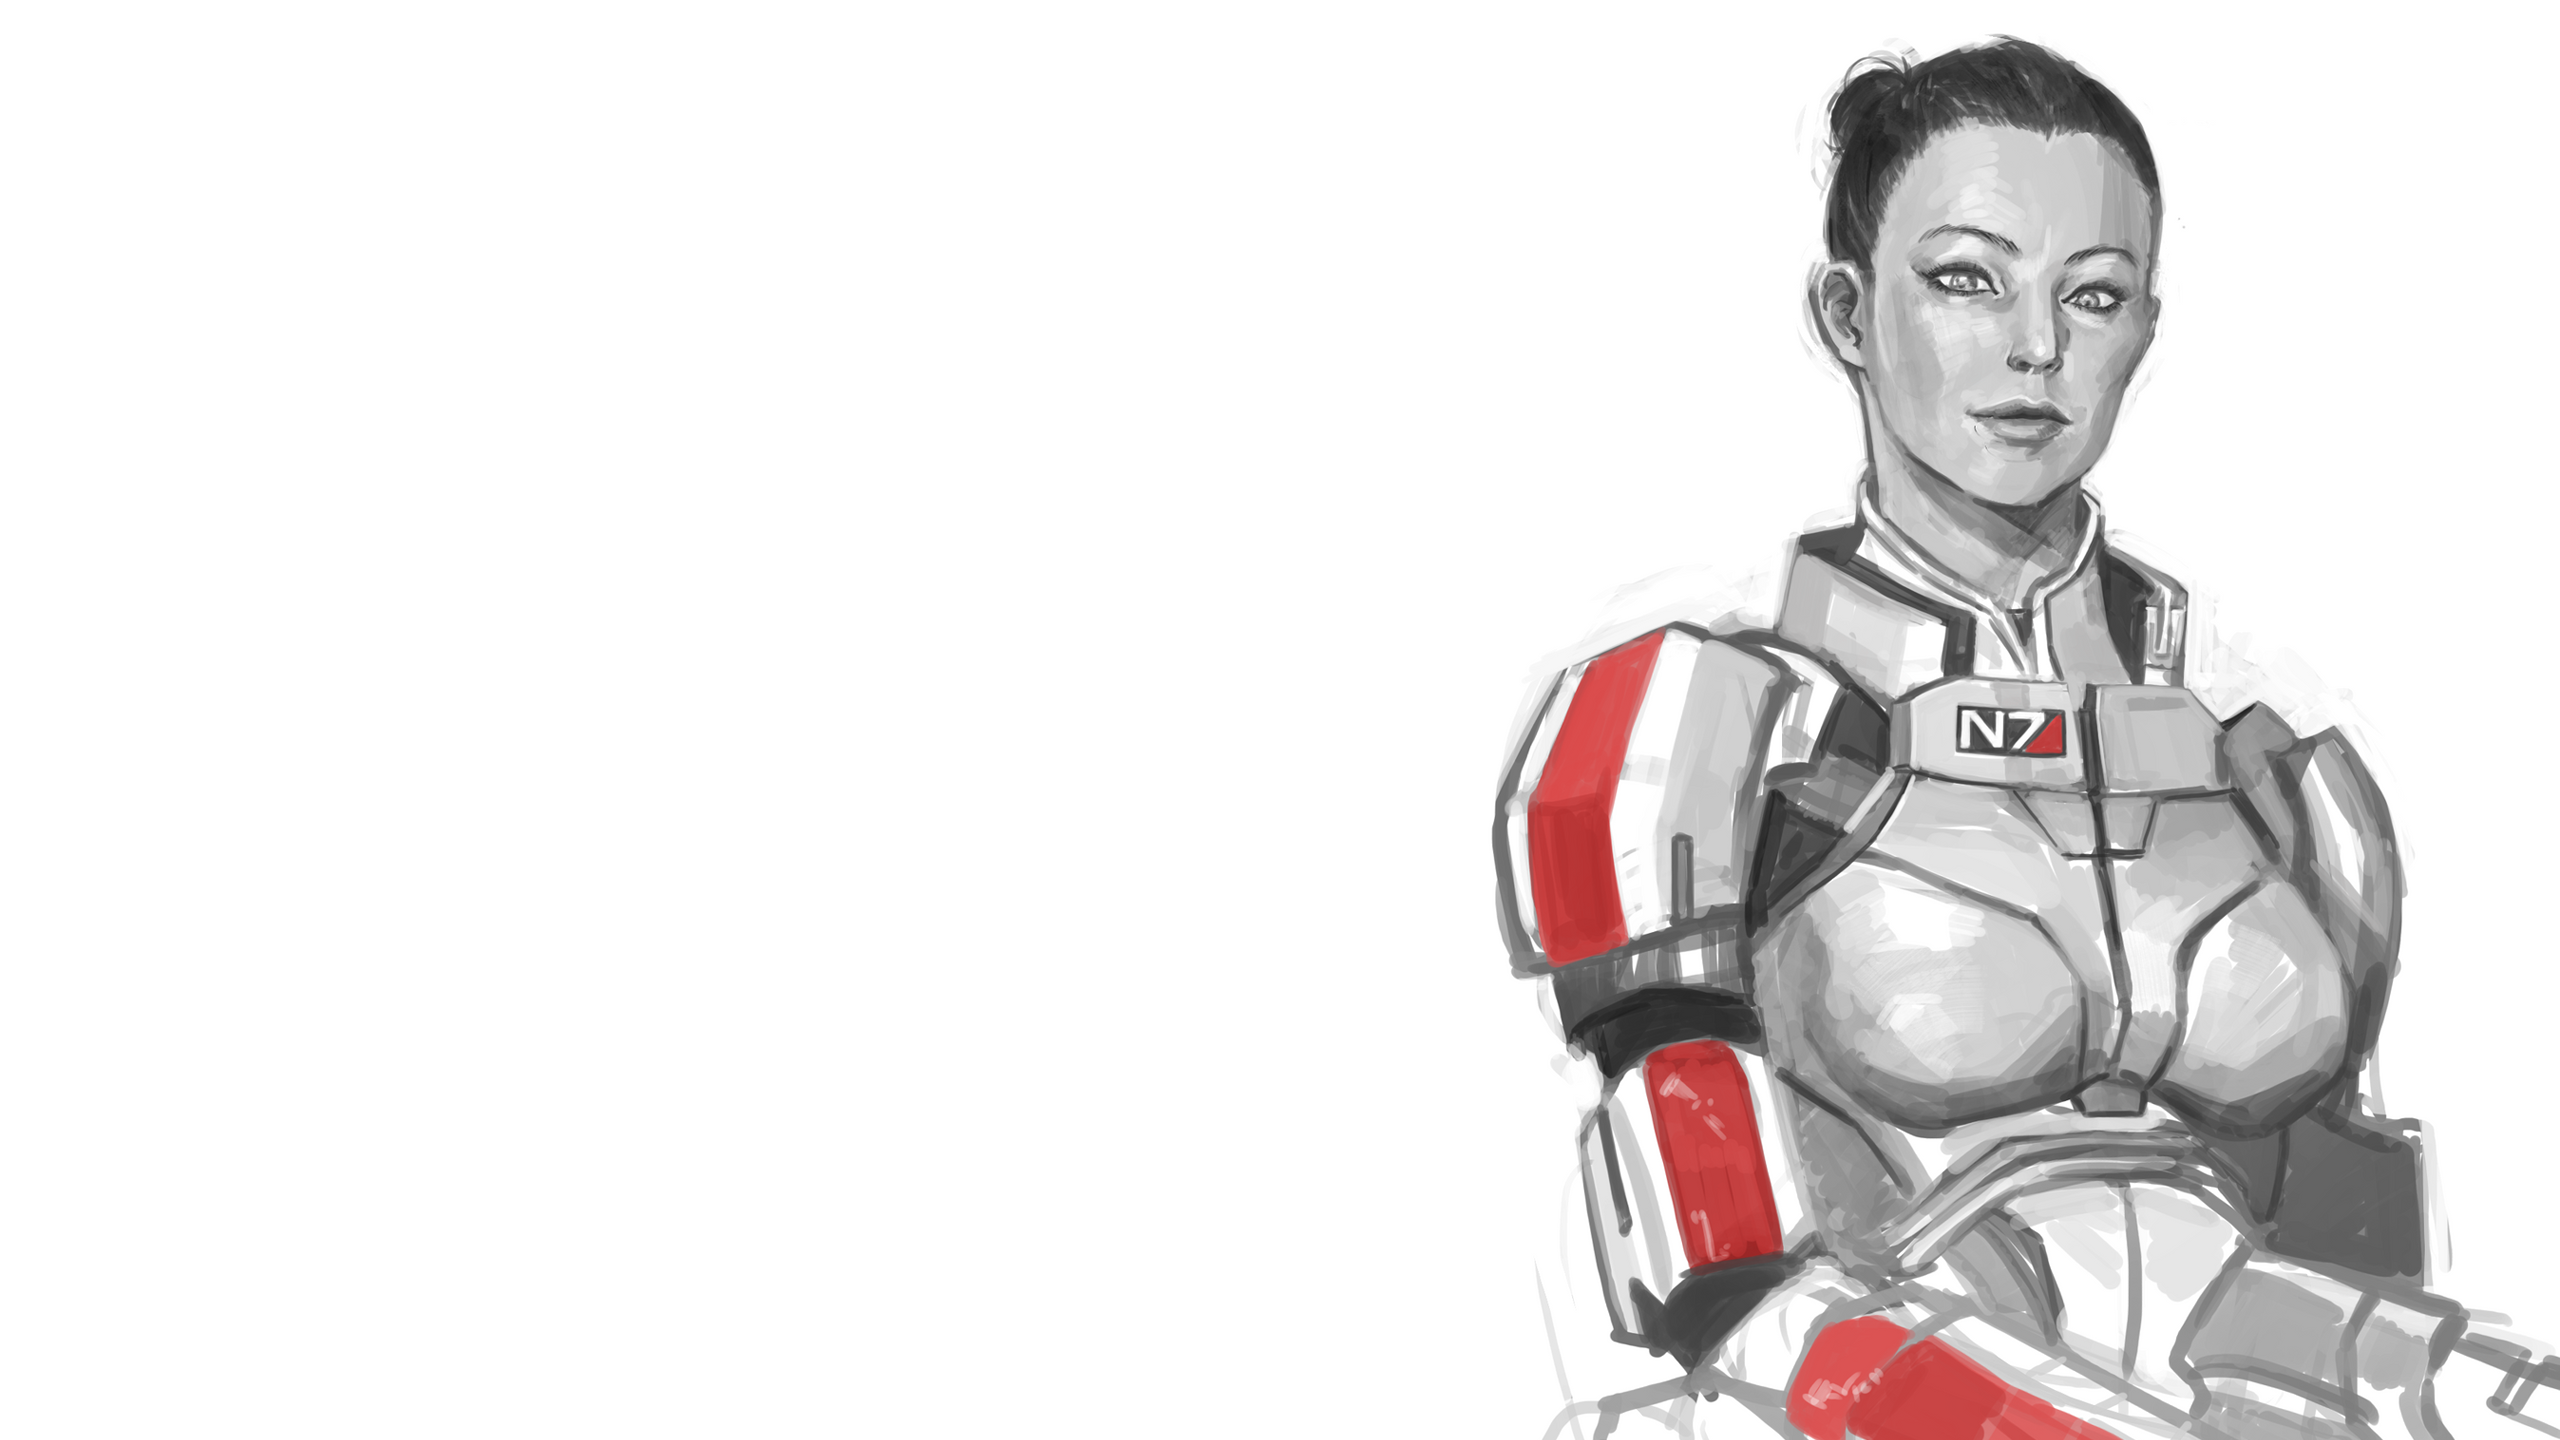 Mass Effect Mass Effect 2 Mass Effect 3 Commander Shepard N7 Mass Effect Cheetahman 2560x1440